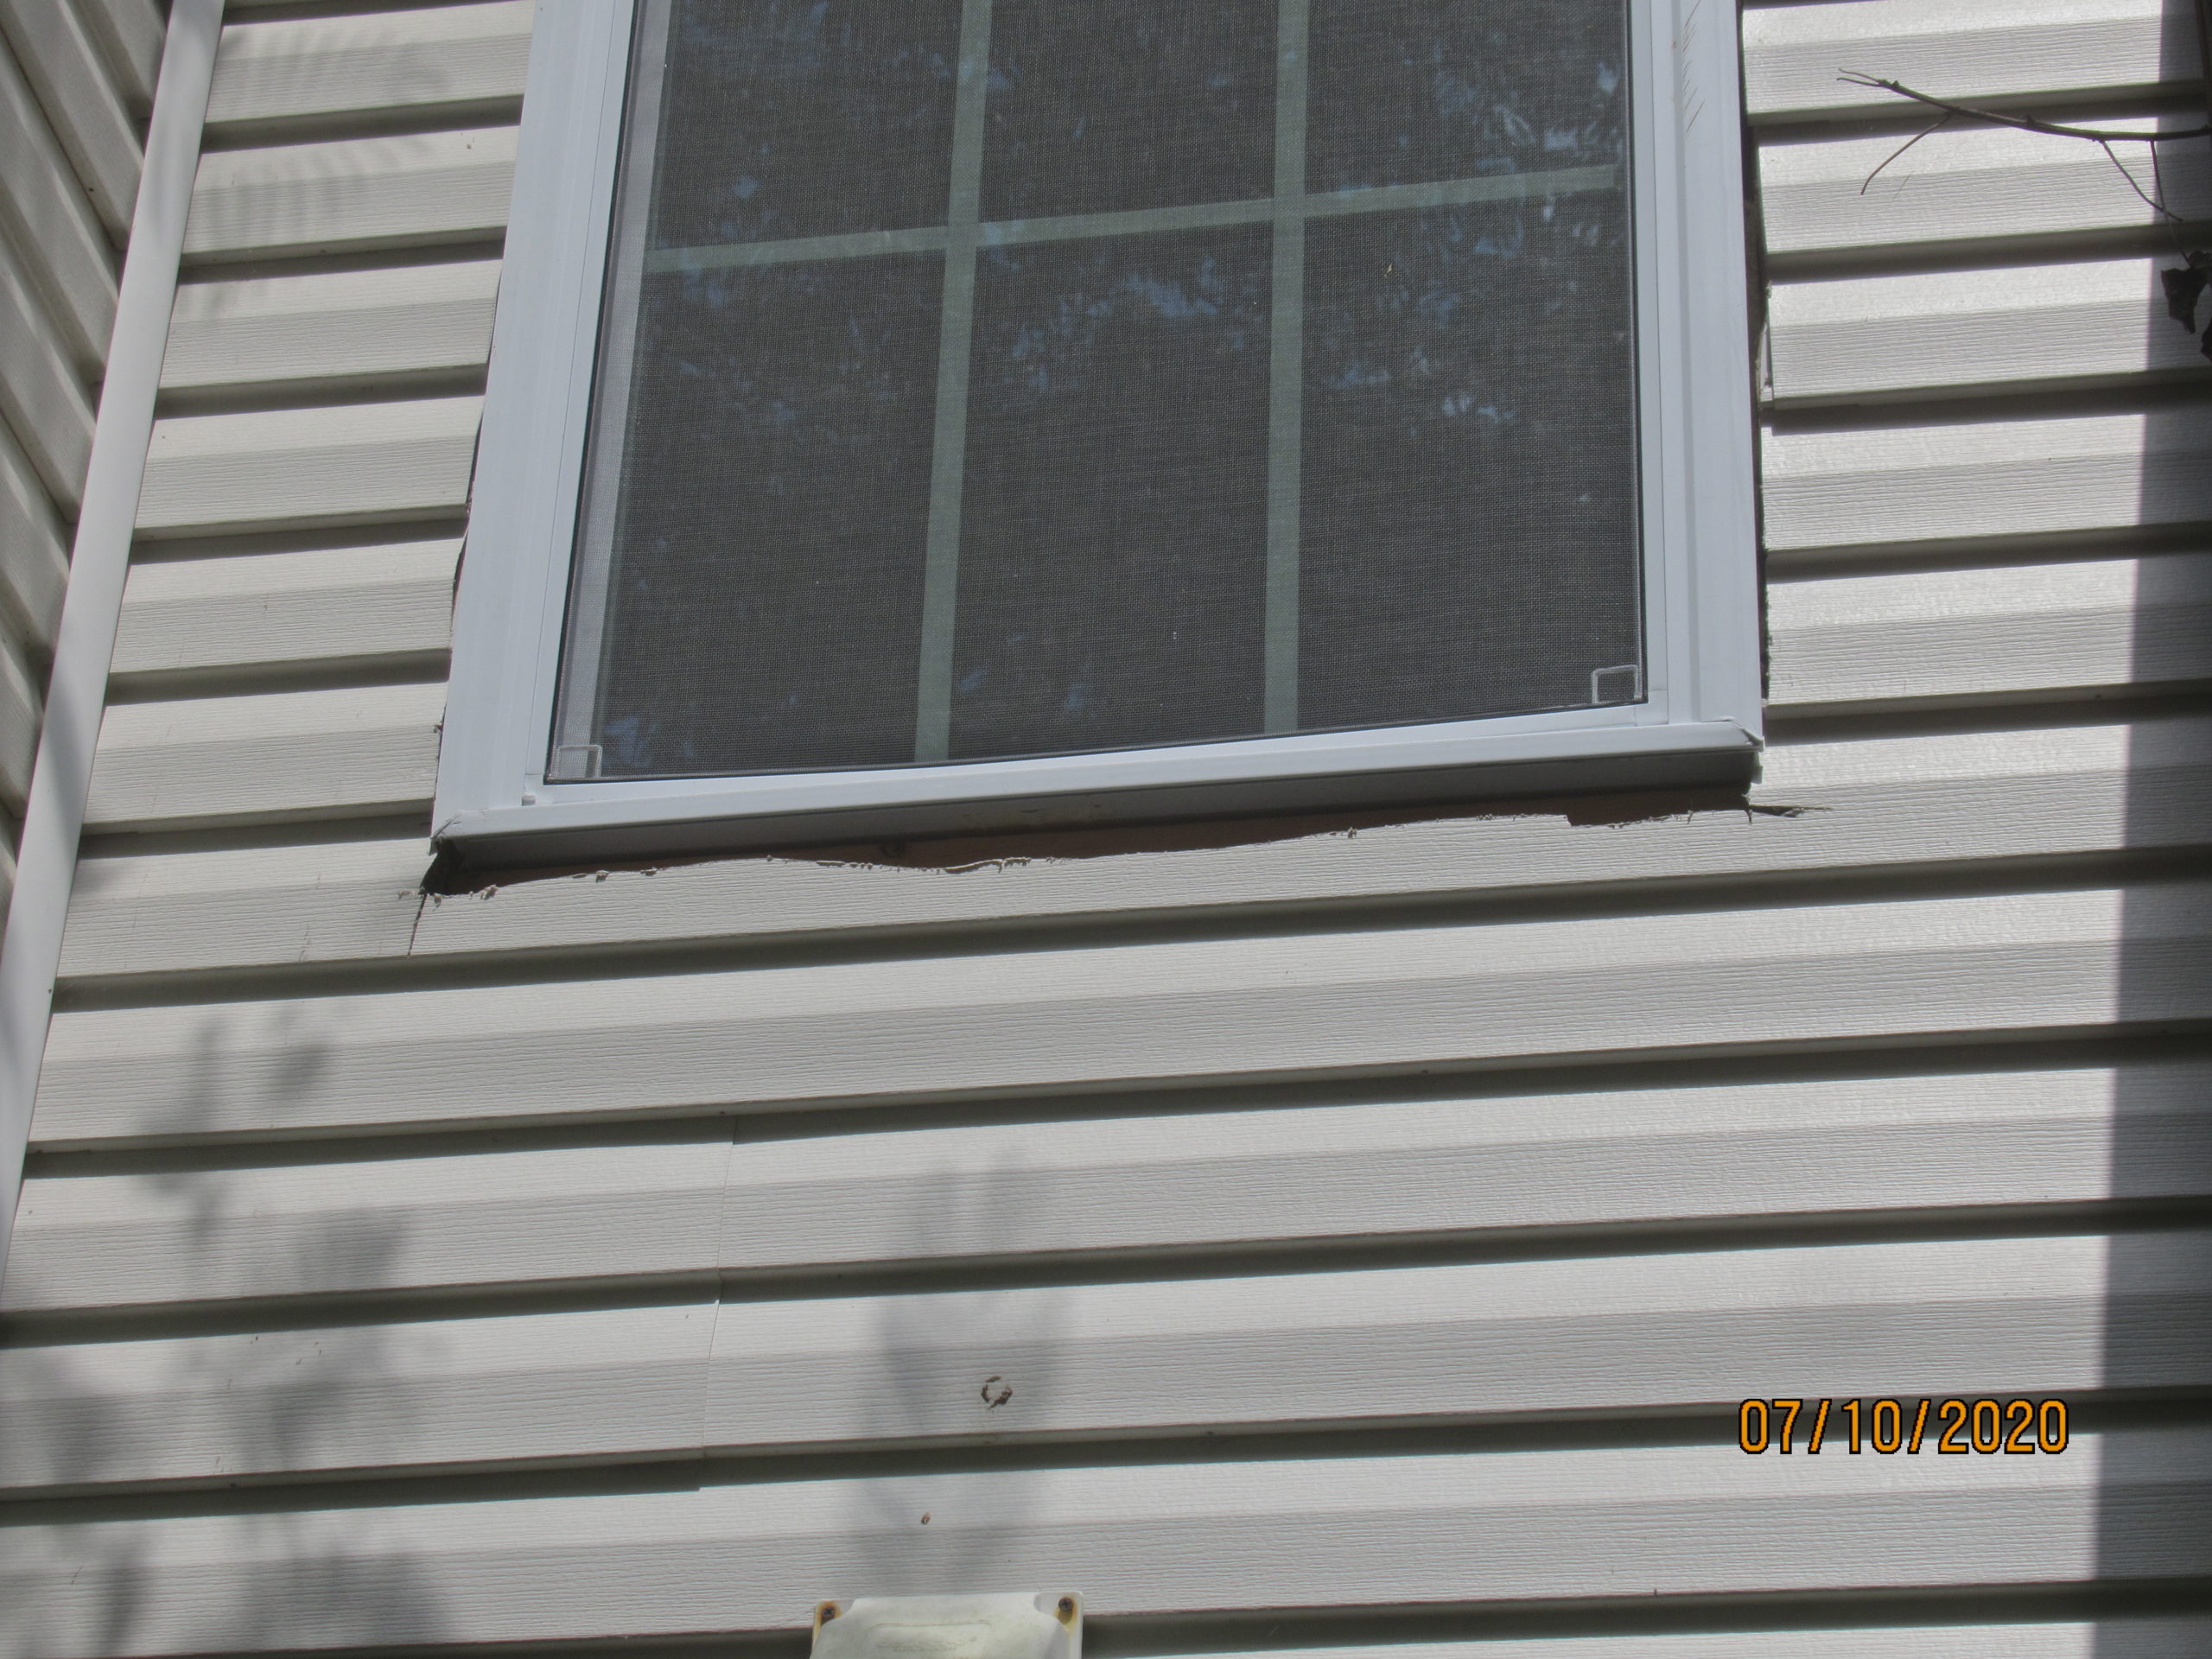 Siding cut for window install